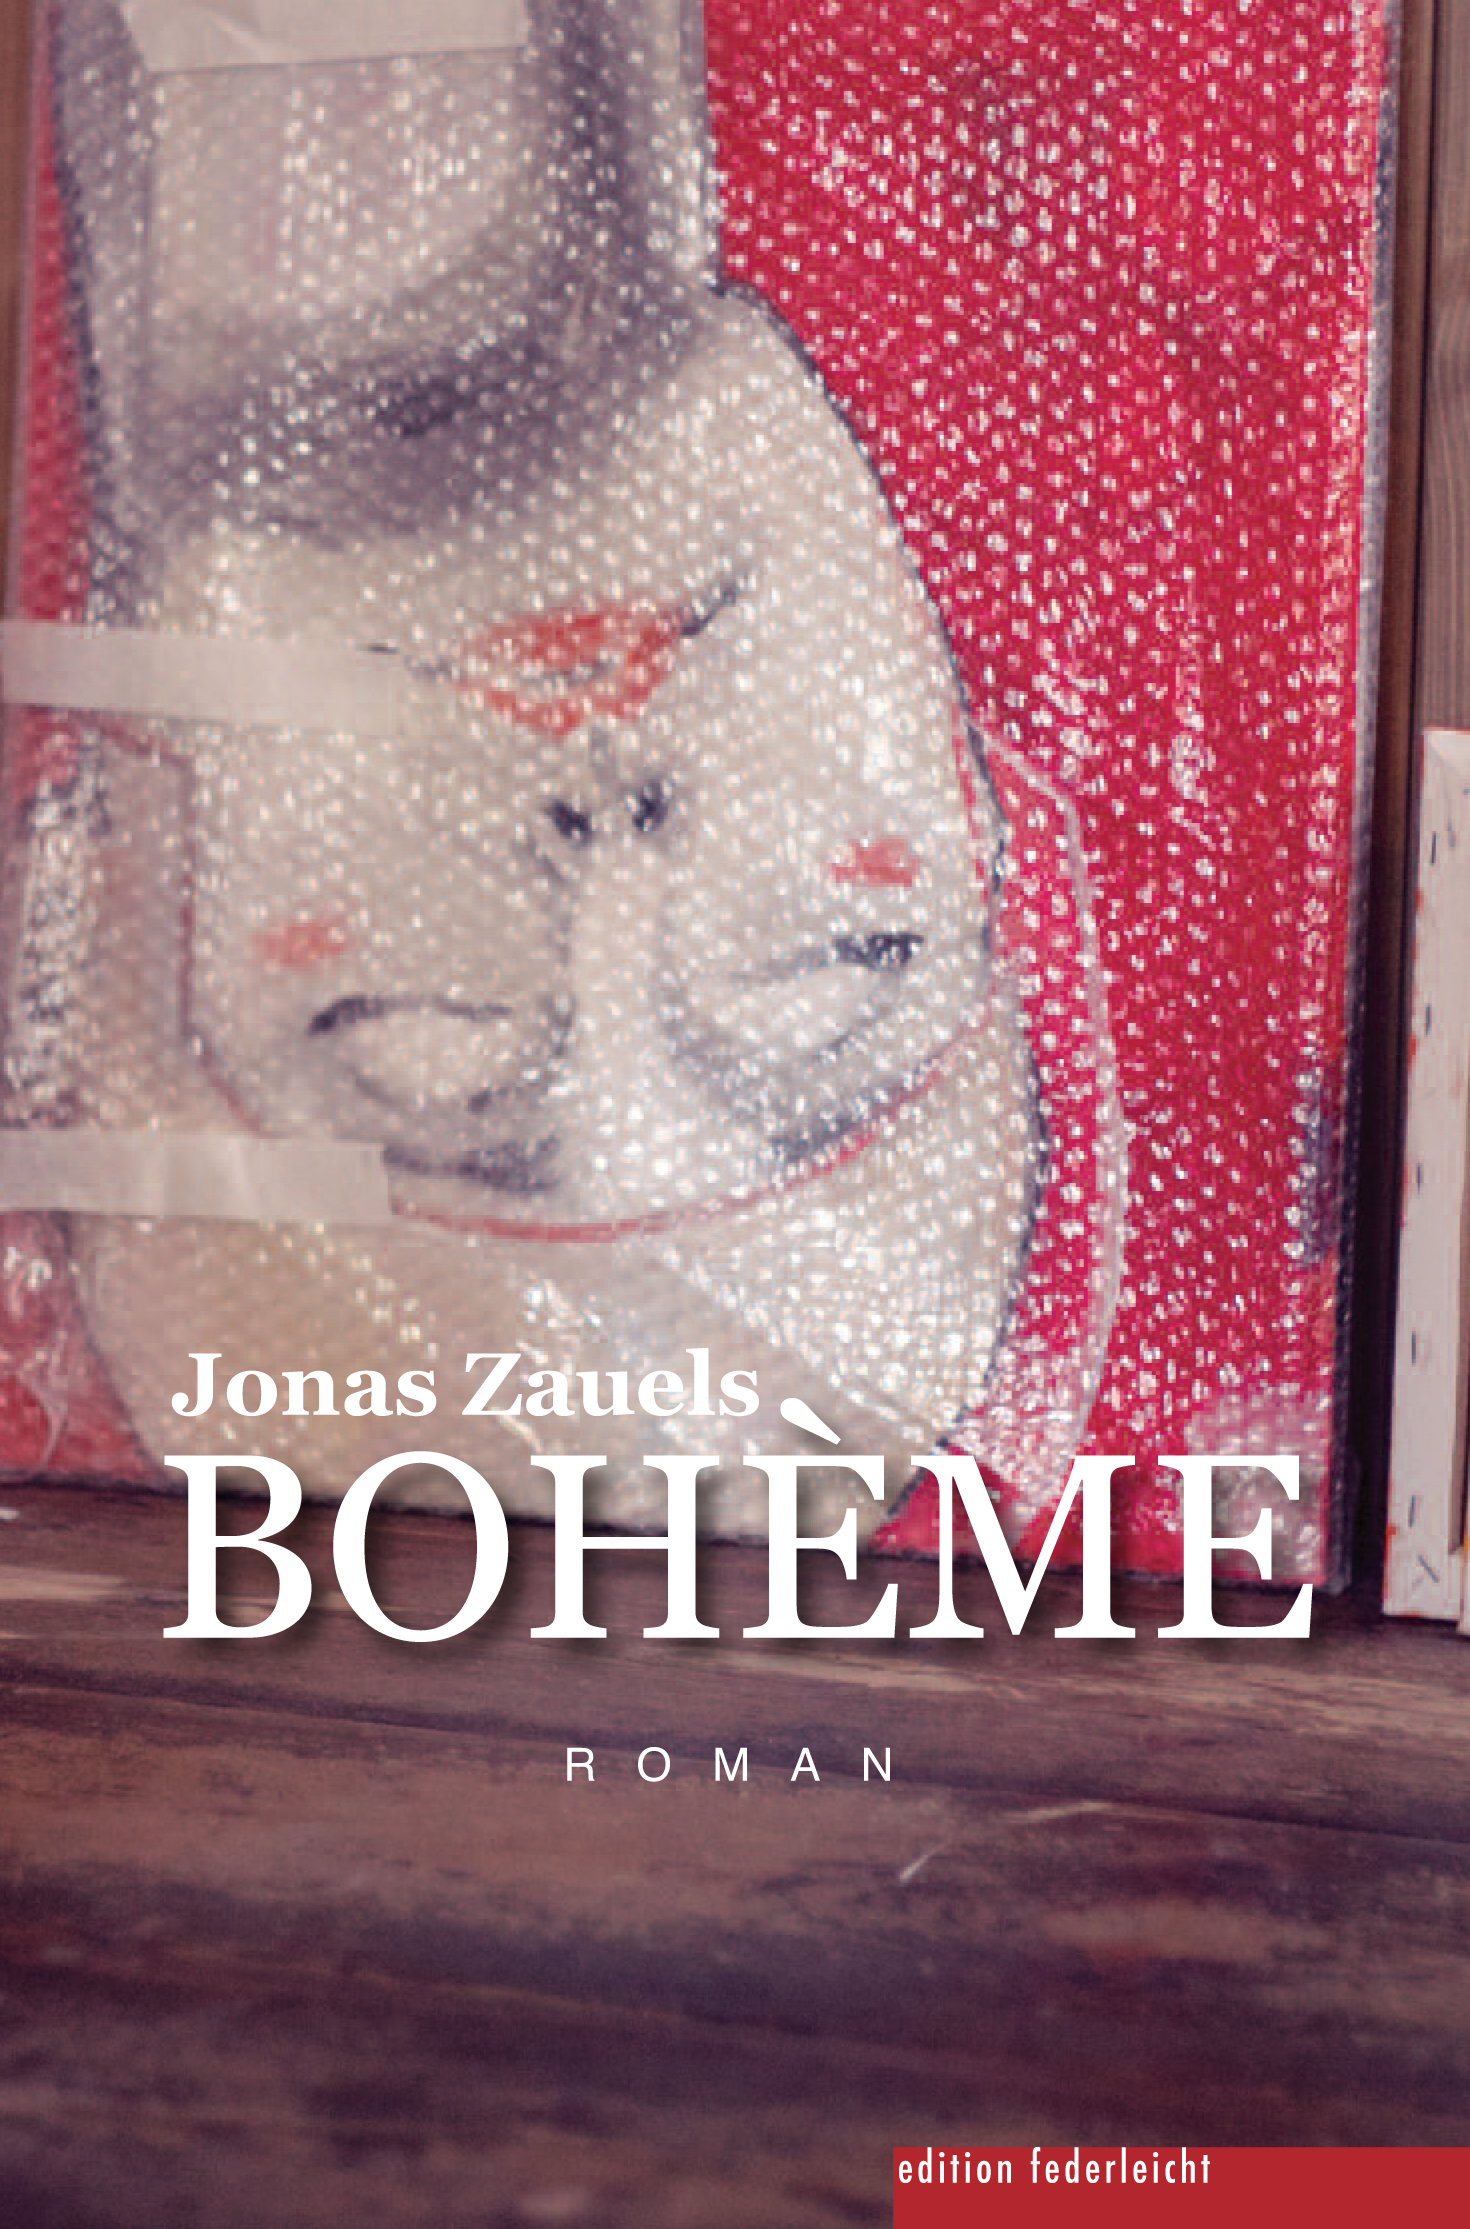 Premierenlesung von Jonas Zauels mit BOHÈME auf Skype: https://join.skype.com/pb6H5Rth6R8V